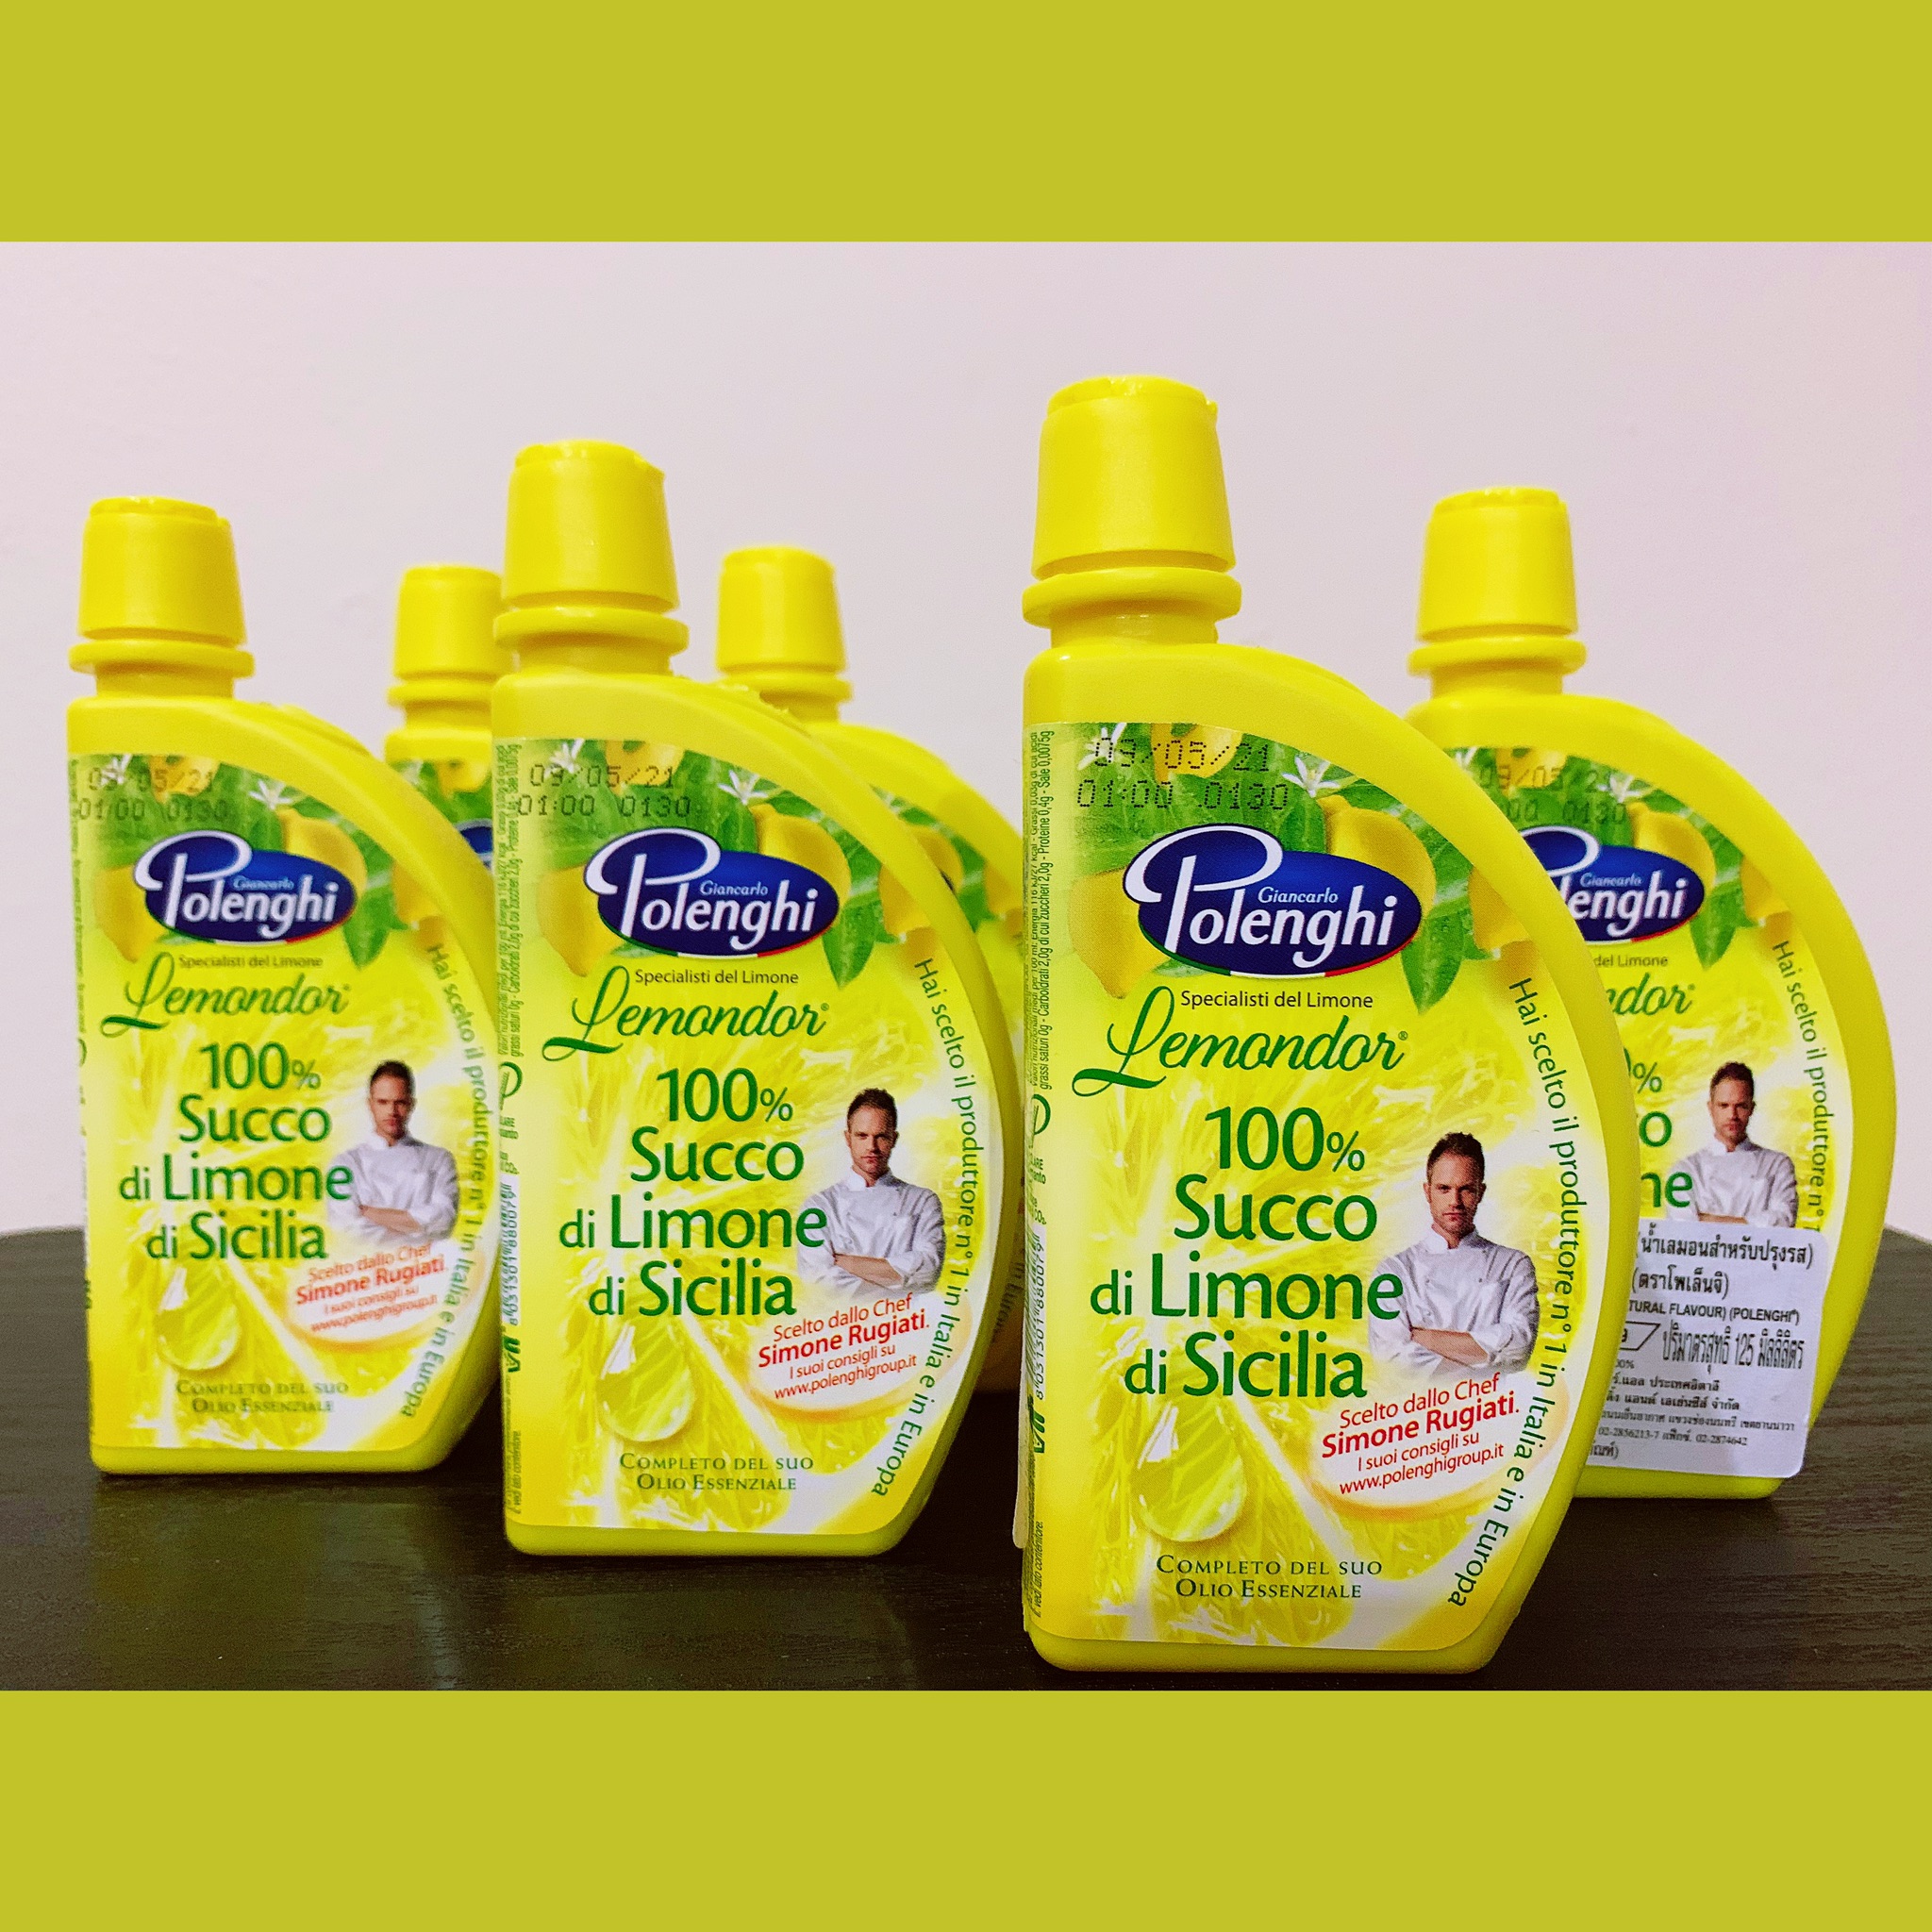 Polenghi Succo Di Limone Di Sicilia Lemon Juice 125ml. (Exp: 03/03/22) น้ำเลมอน โพเล็นจิ สำหรับปรุงรส 125มล.